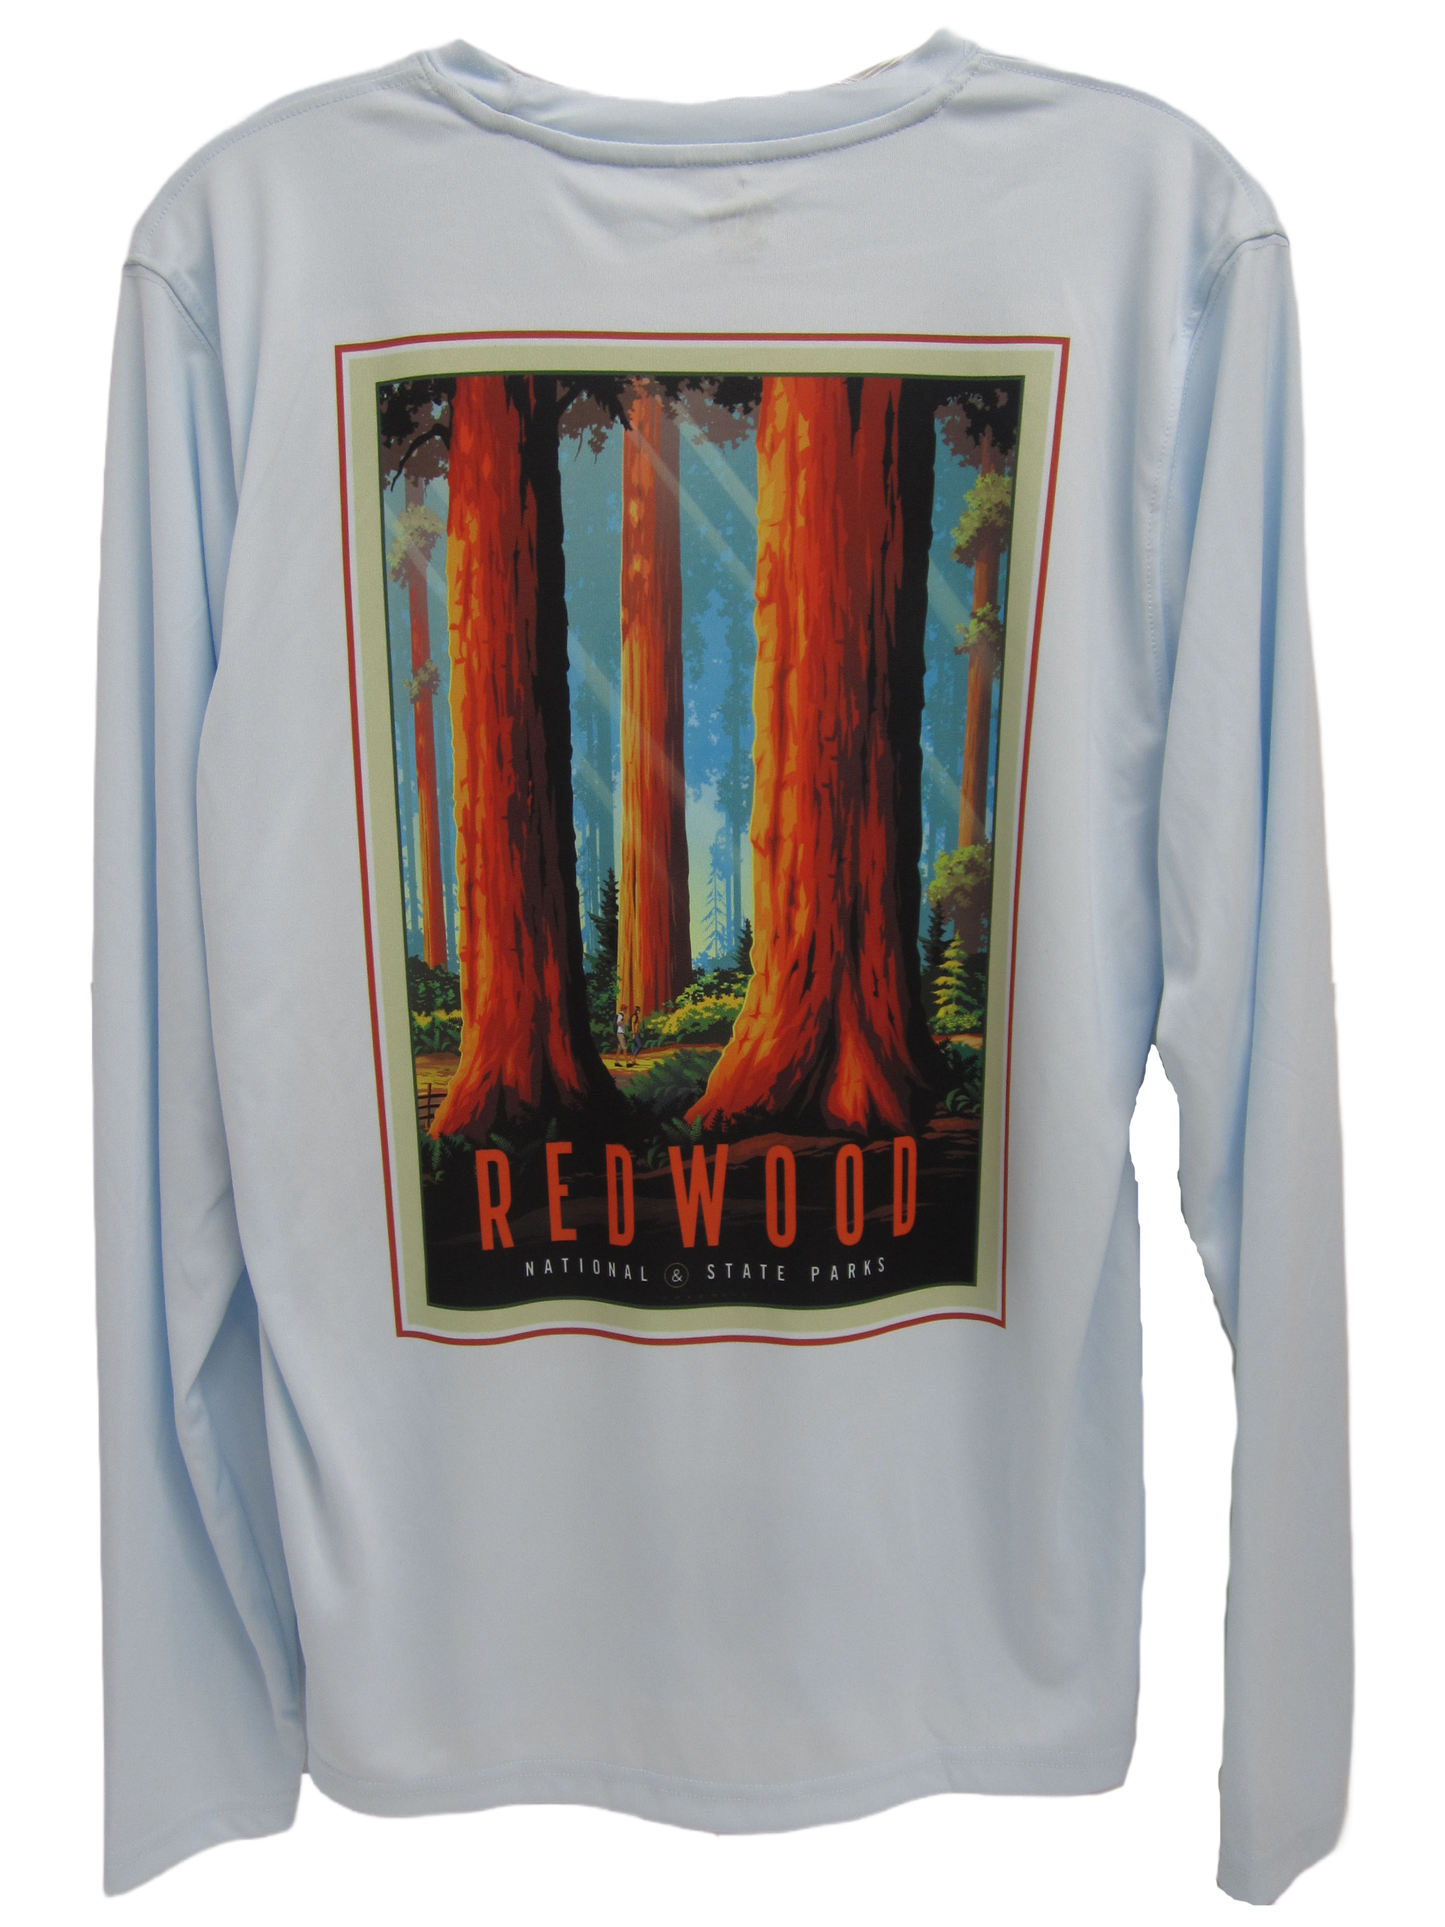 Redwood National & State Parks Activewear Long Sleeve Shirt